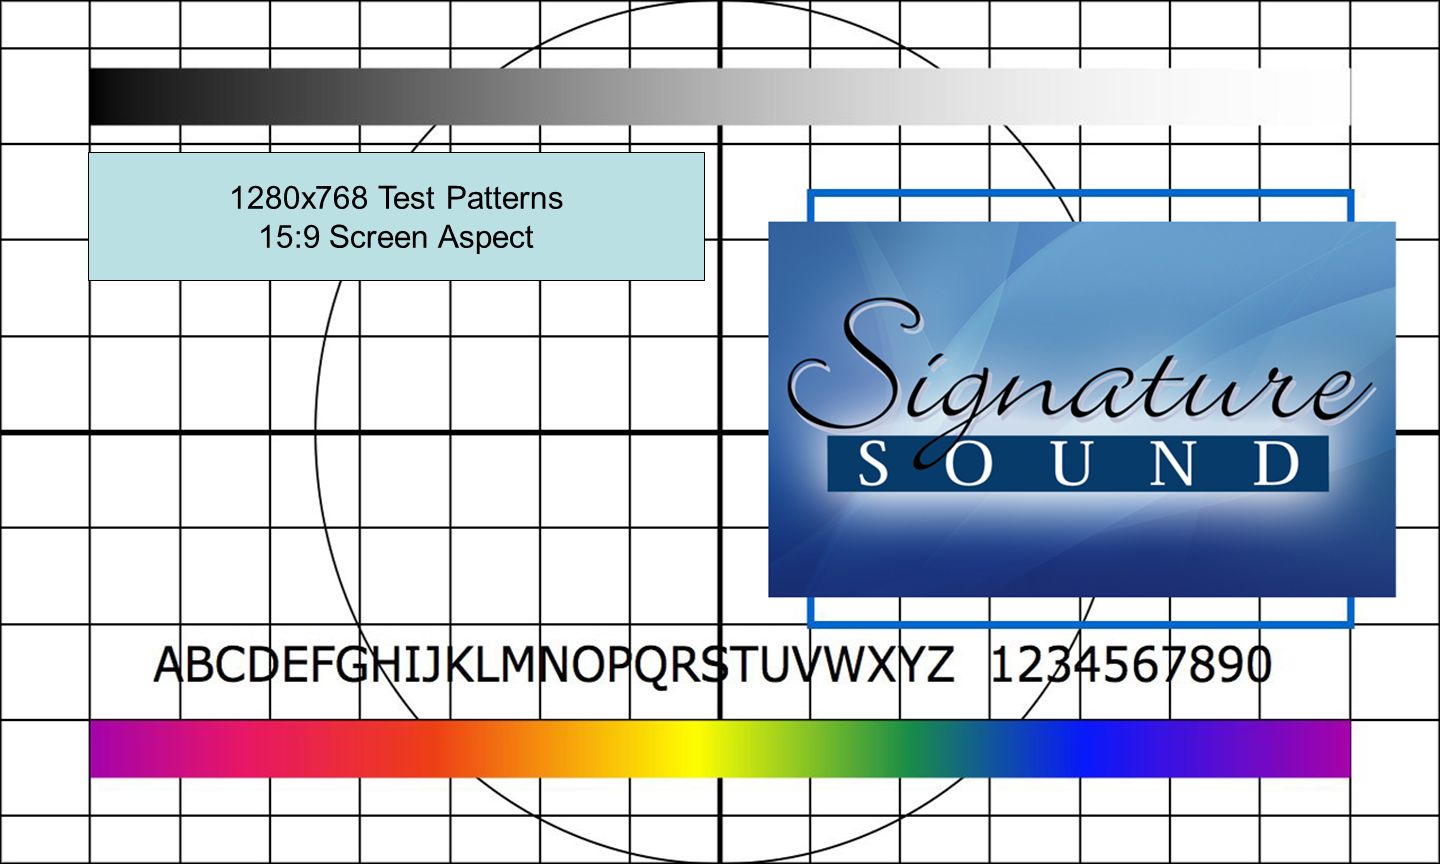 1280x768 Test Patterns 15:9 Screen Aspect